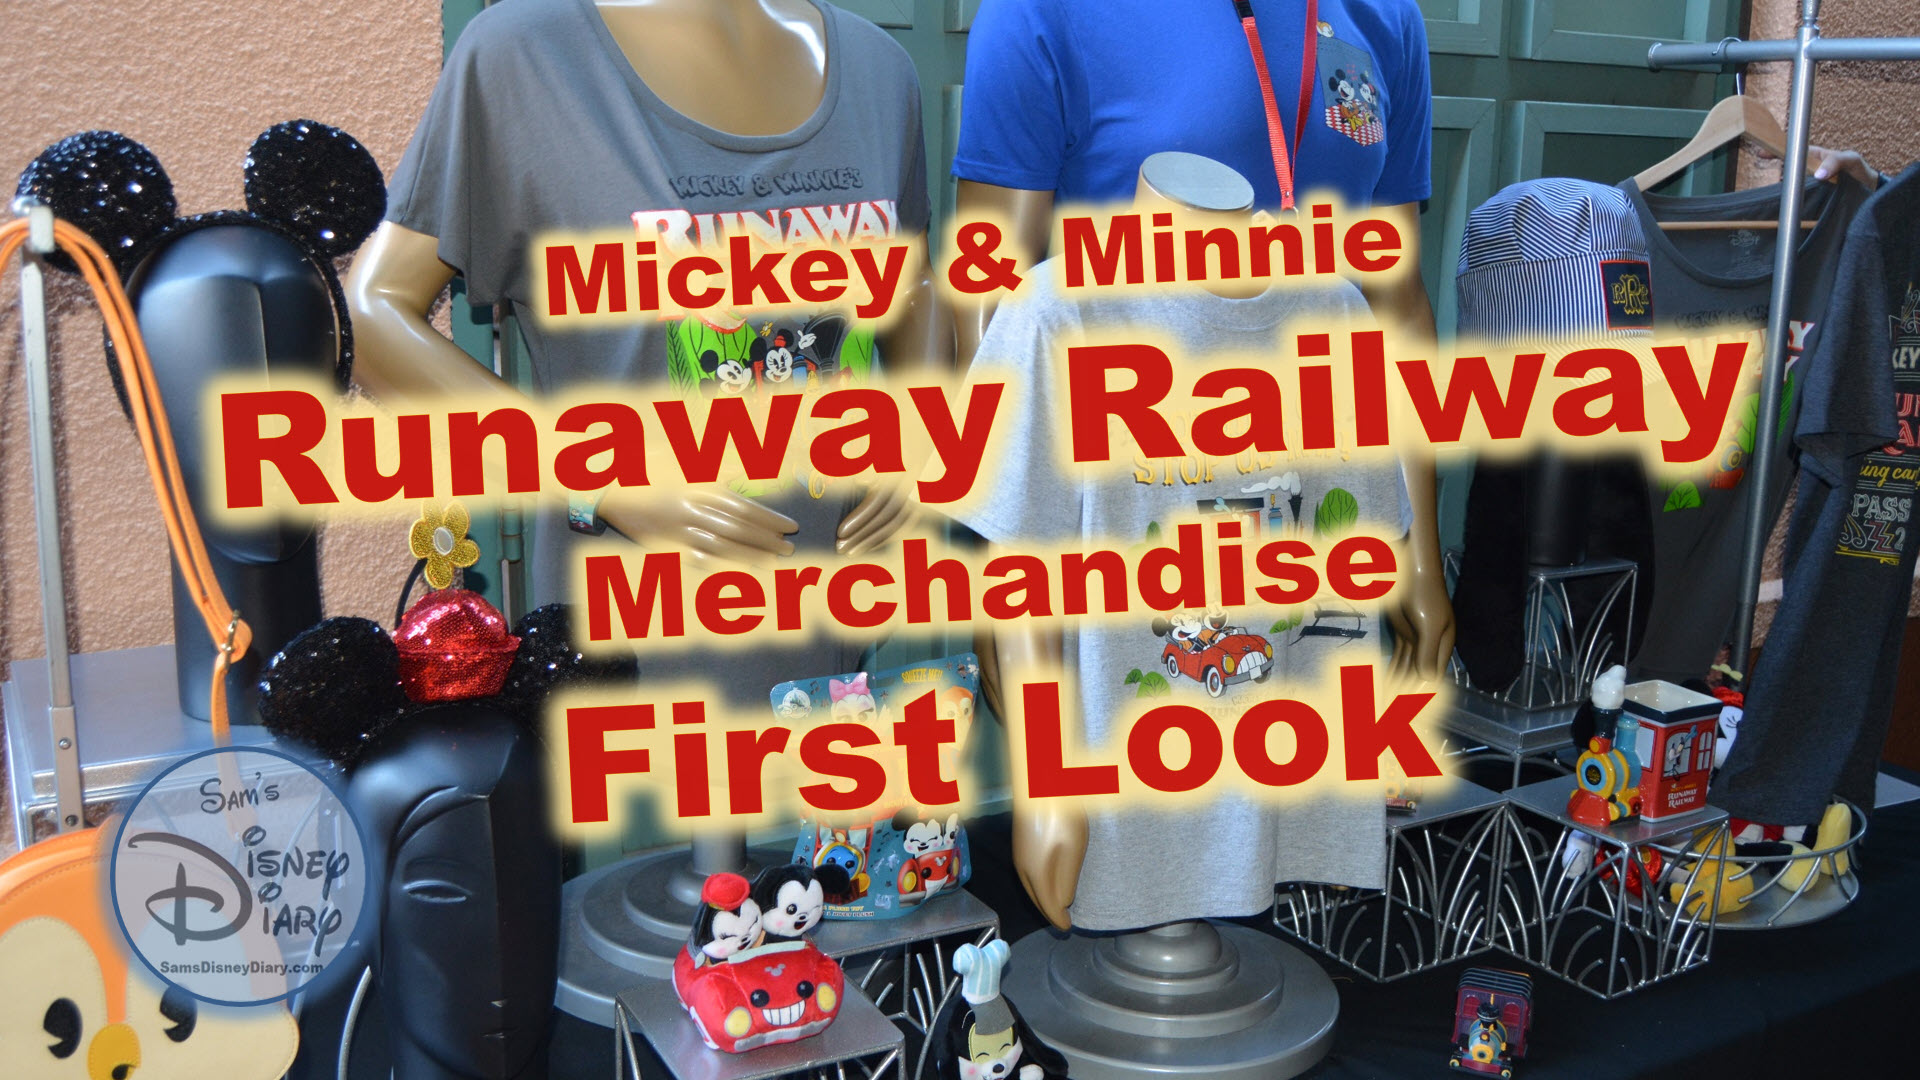 Mickey and minnie's runaway railway merchandise